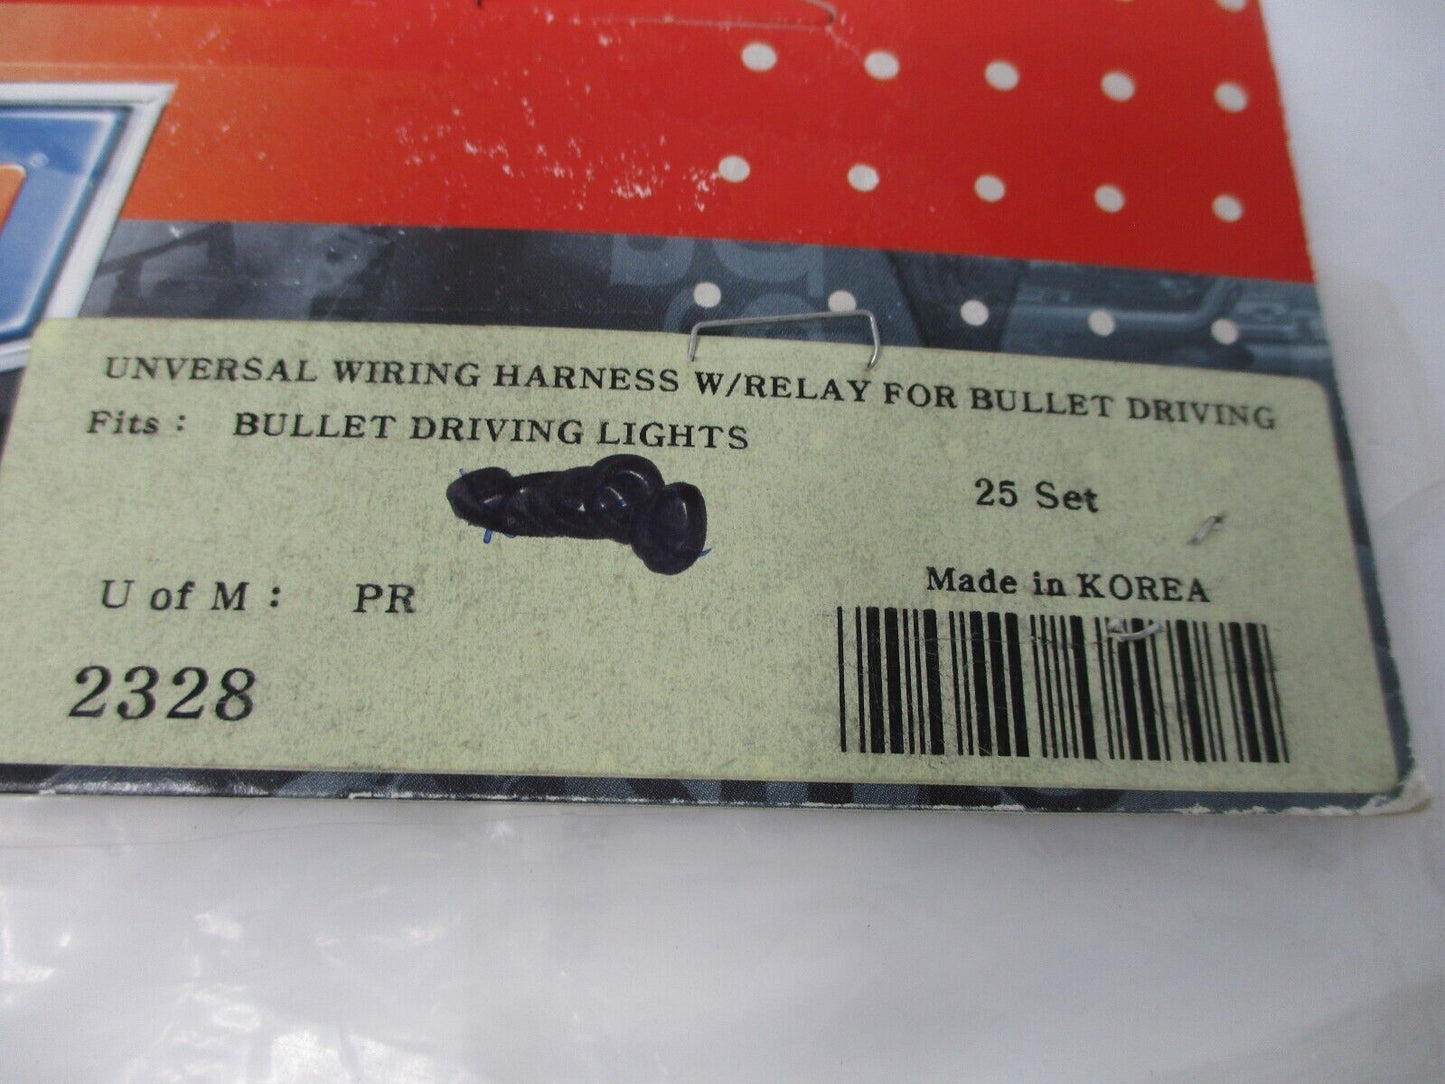 Kuryakyn Universal Wiring Harness for Bullet Driving Lights 2328